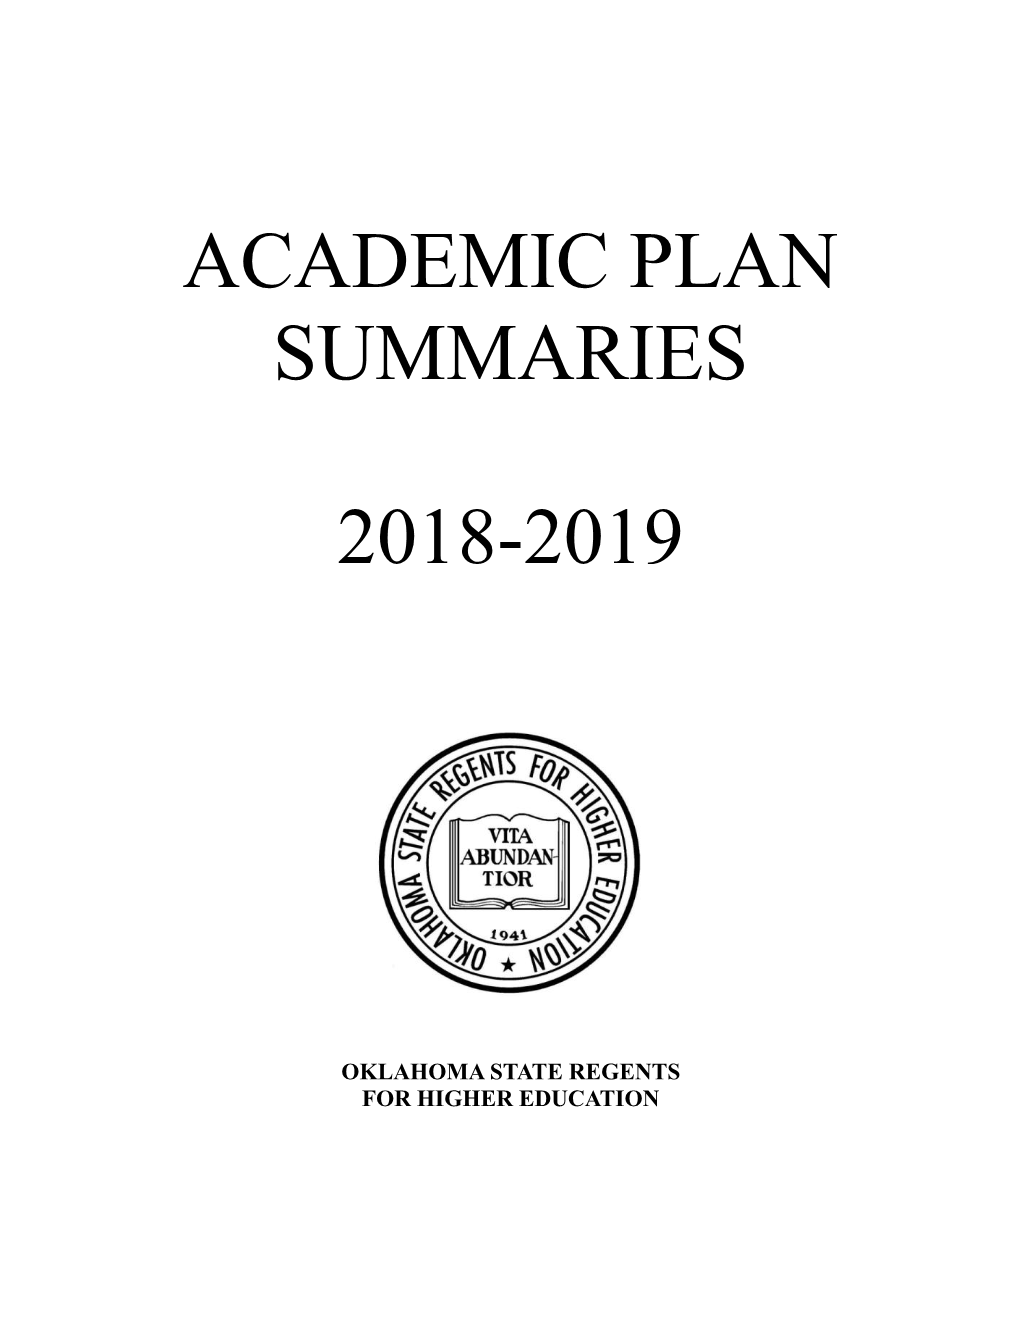 Academic Plan Summaries 2018-2019